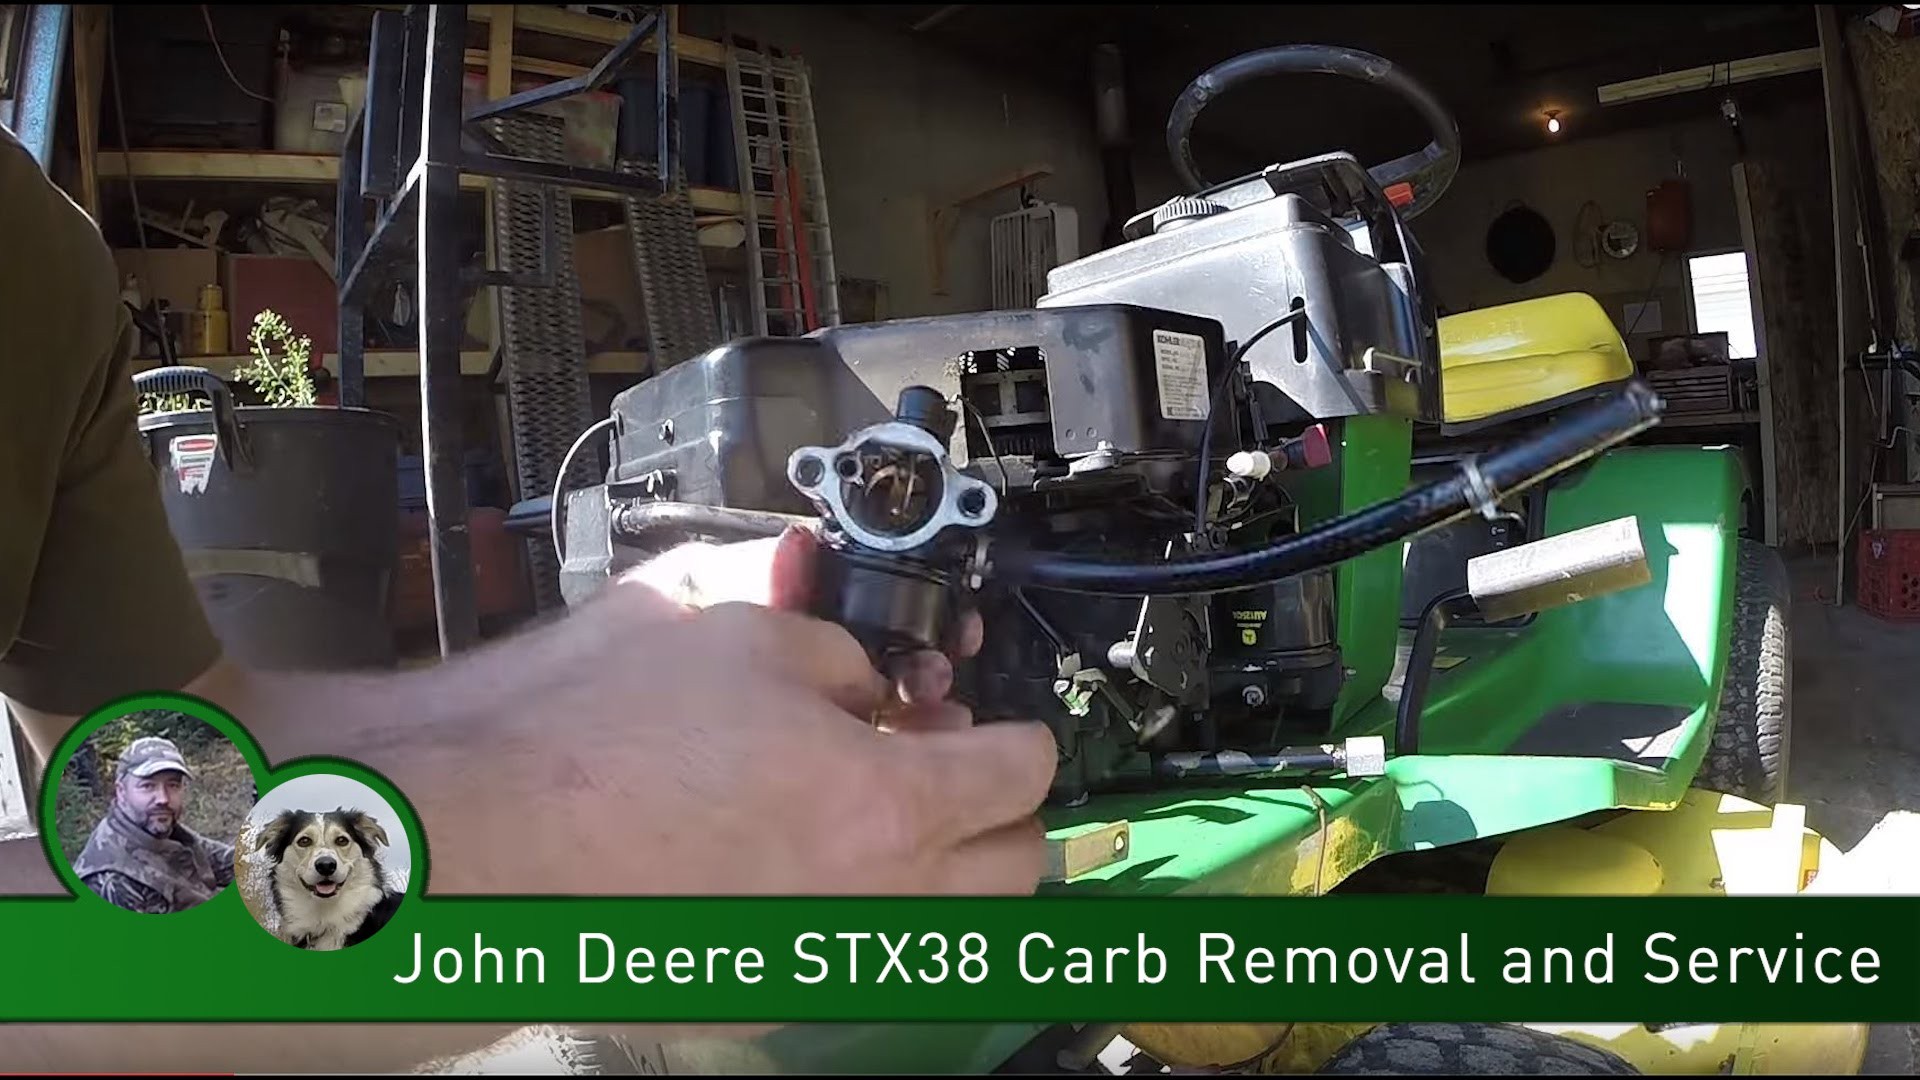 John Deere La125 Engine Diagram John Deere Stx38 Carb Removal and Service Of John Deere La125 Engine Diagram